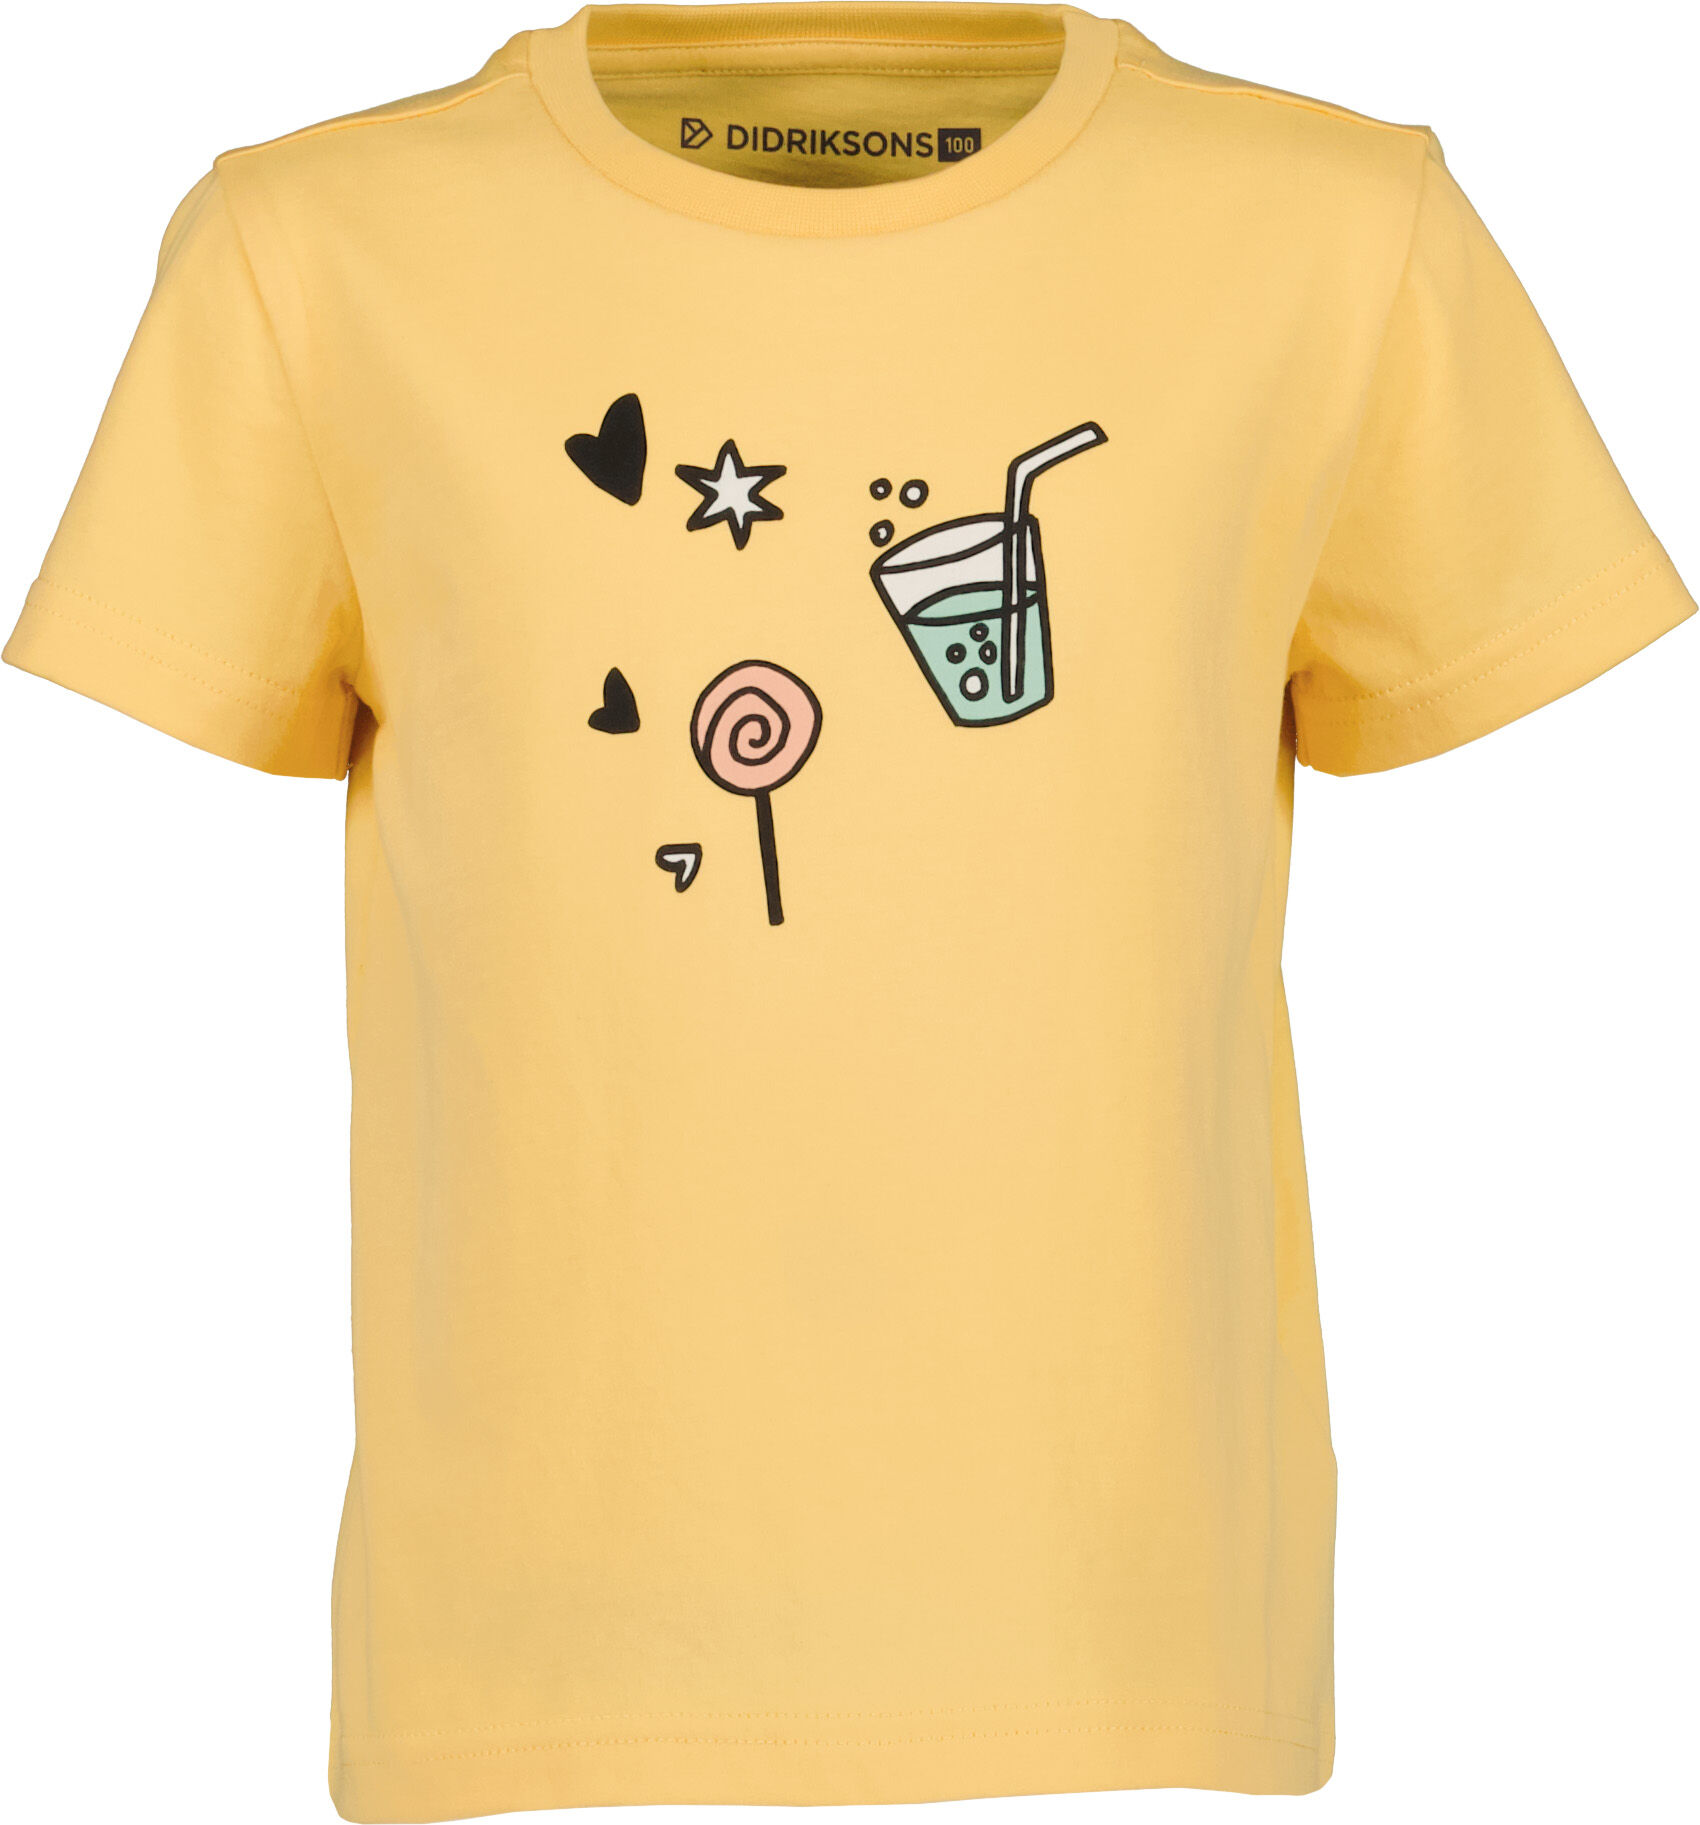 Didriksons Mynta T-shirt Creamy Yellow 80